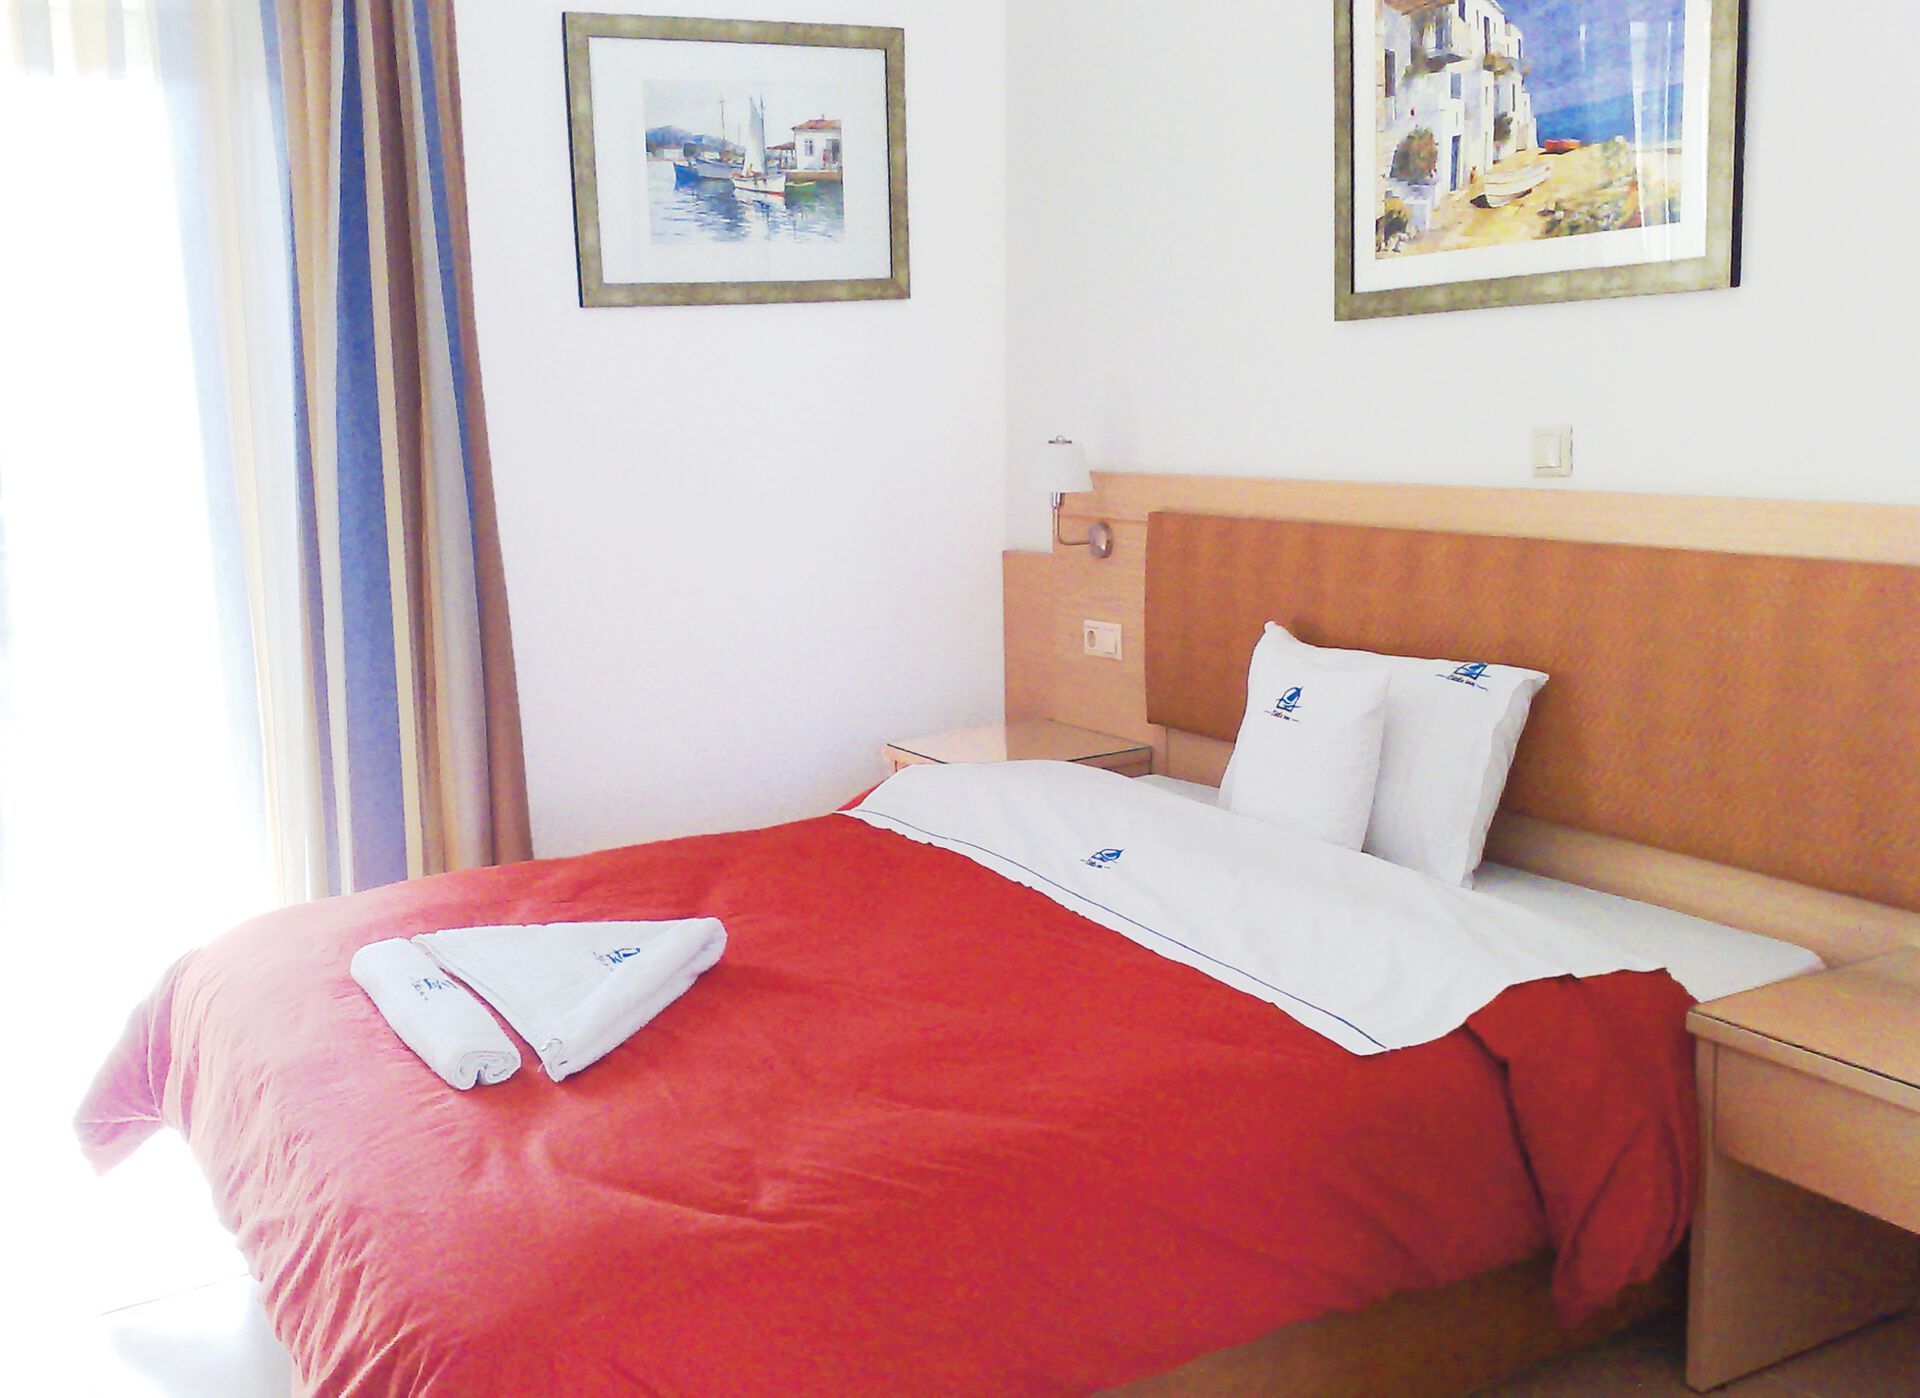 Crète - Agia Galini - Grèce - Iles grecques - Hotel Little Inn 3*